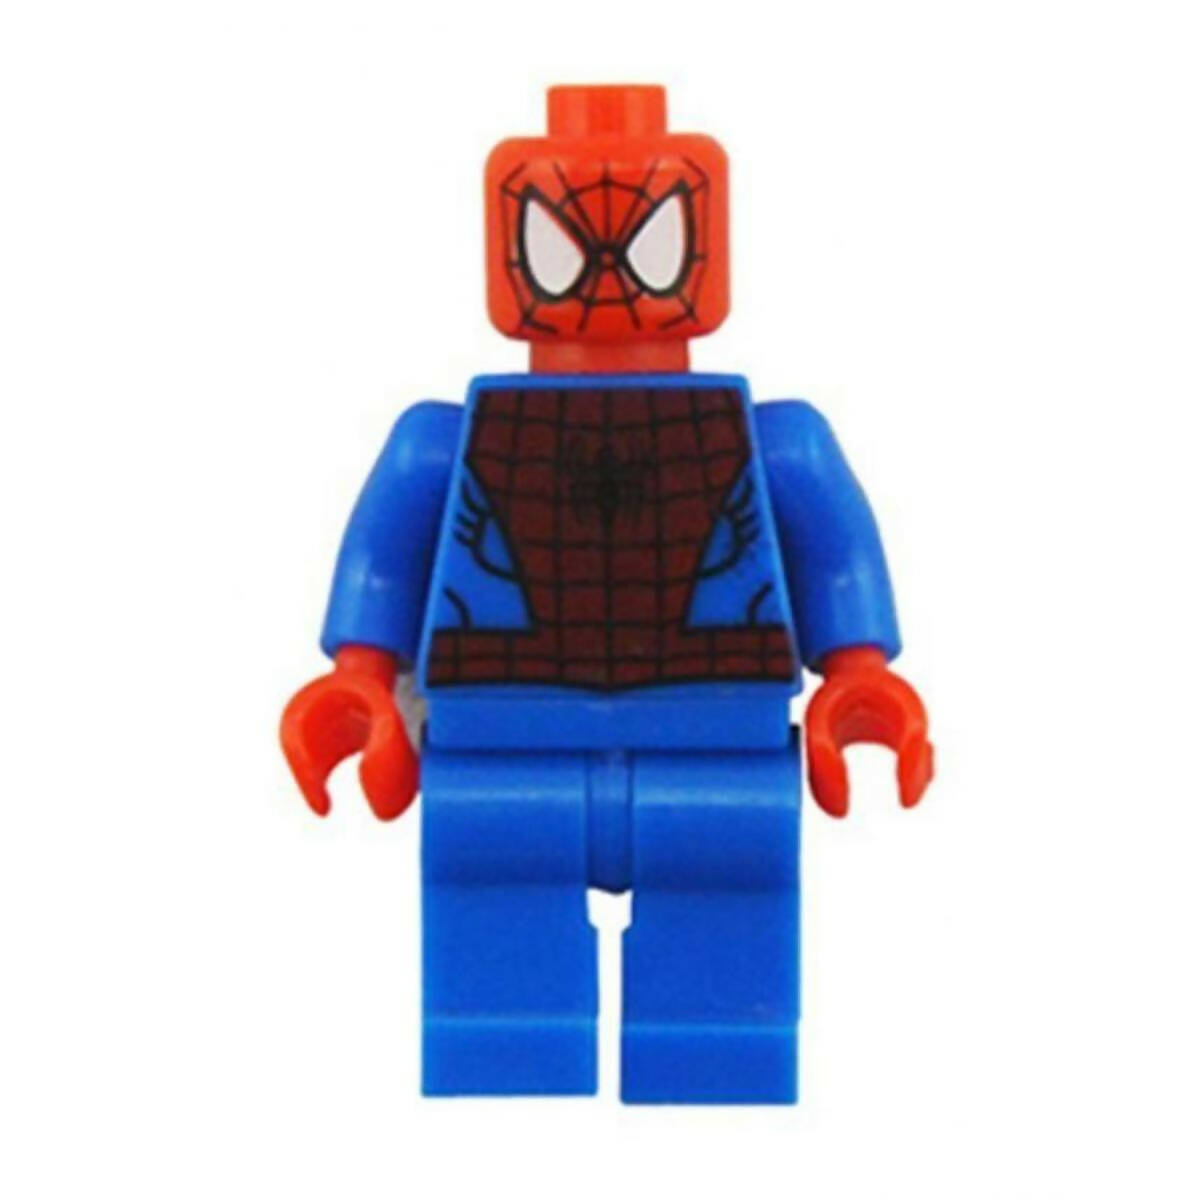 Planet X - Spiderman Mini Action Figure Building Blocks - Almost 2 inches